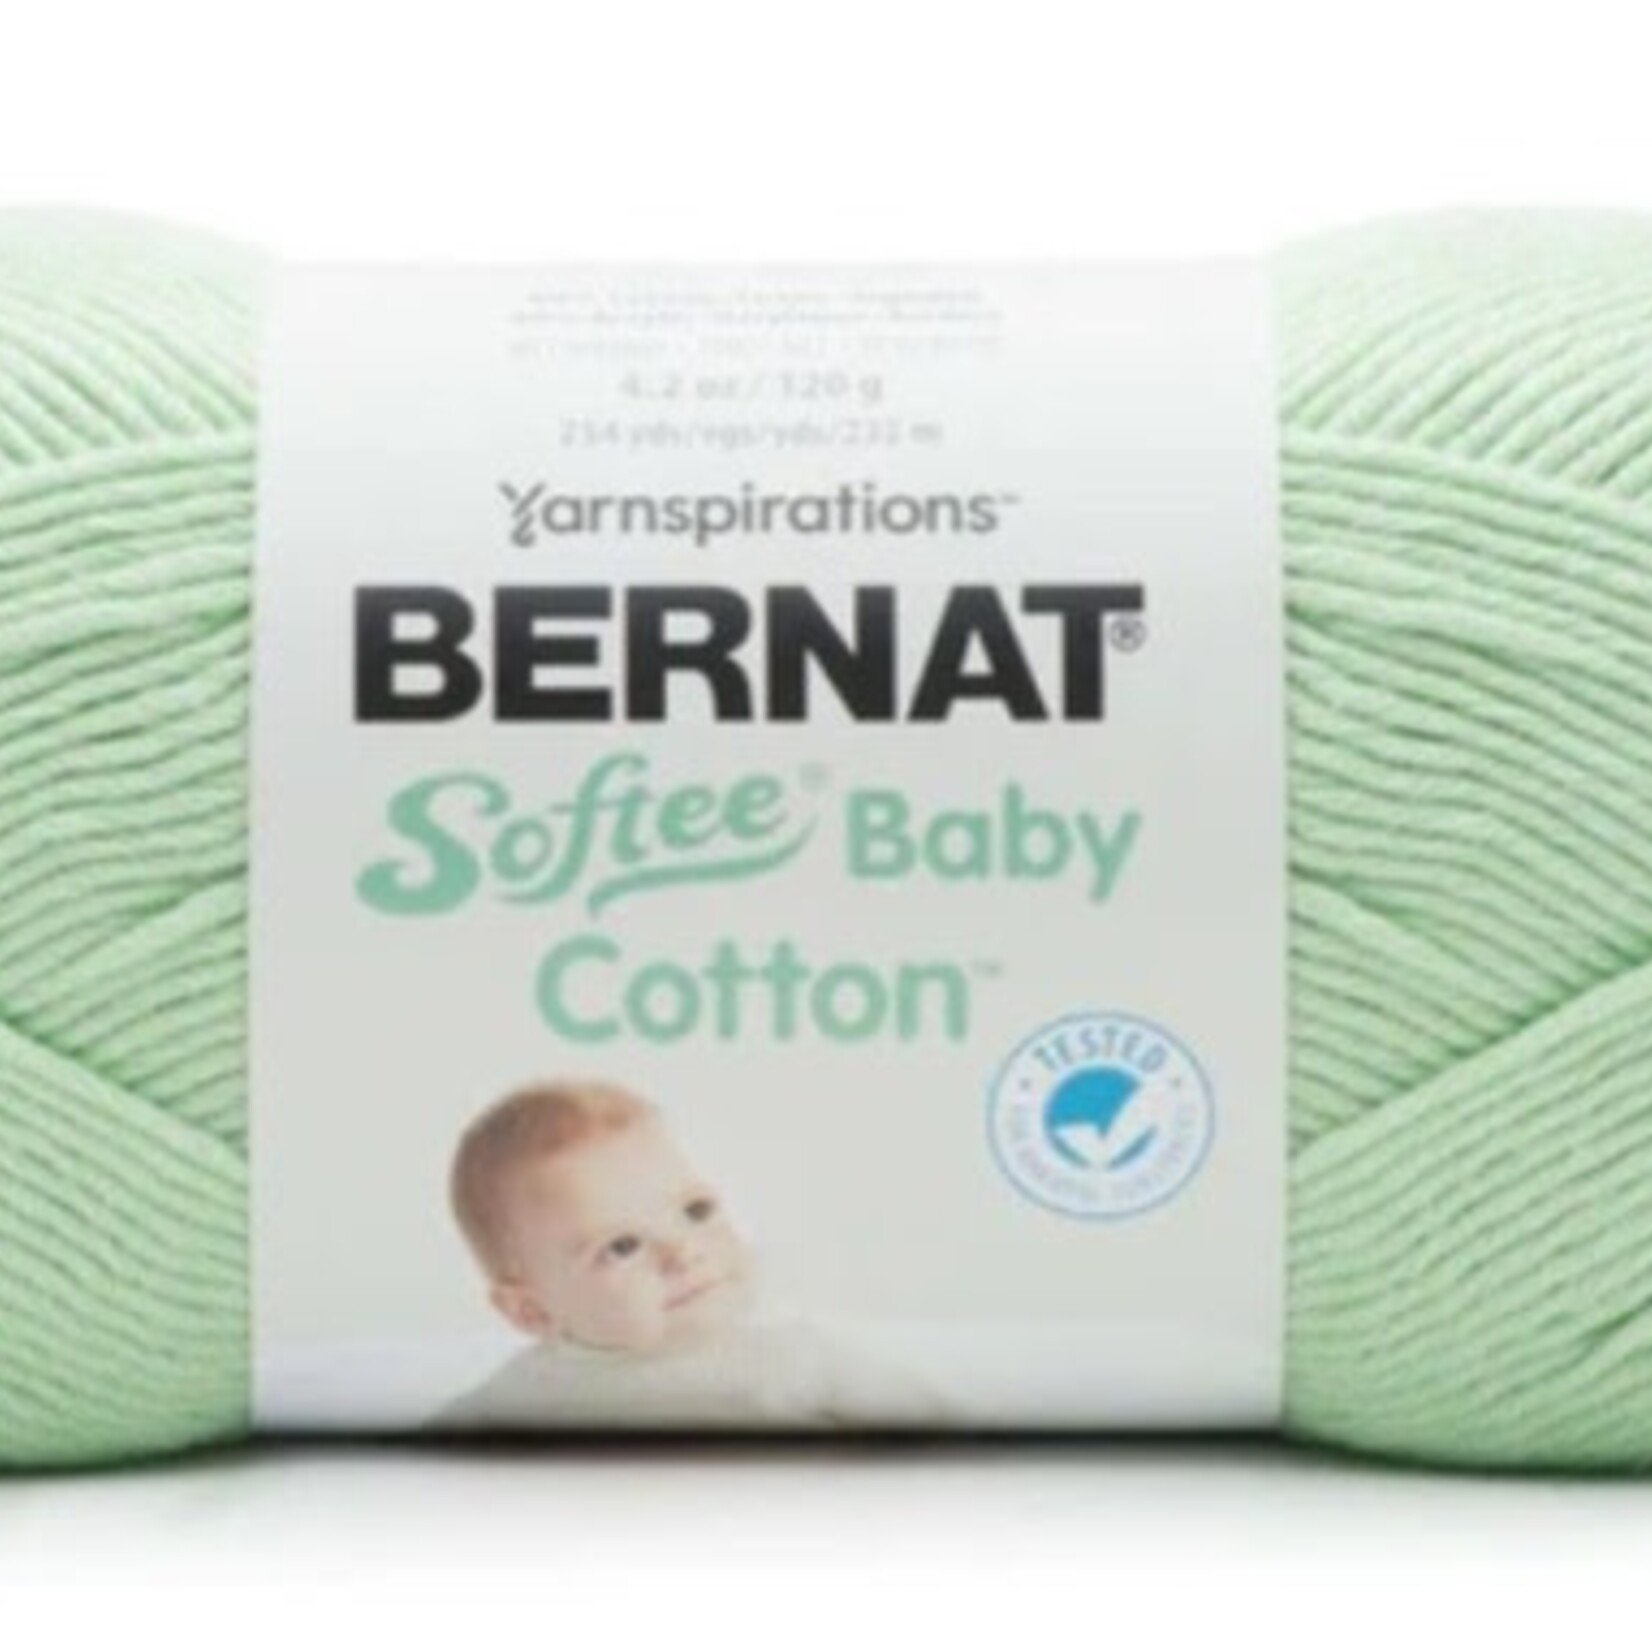 Bernat Softee Baby Cotton by Bernat